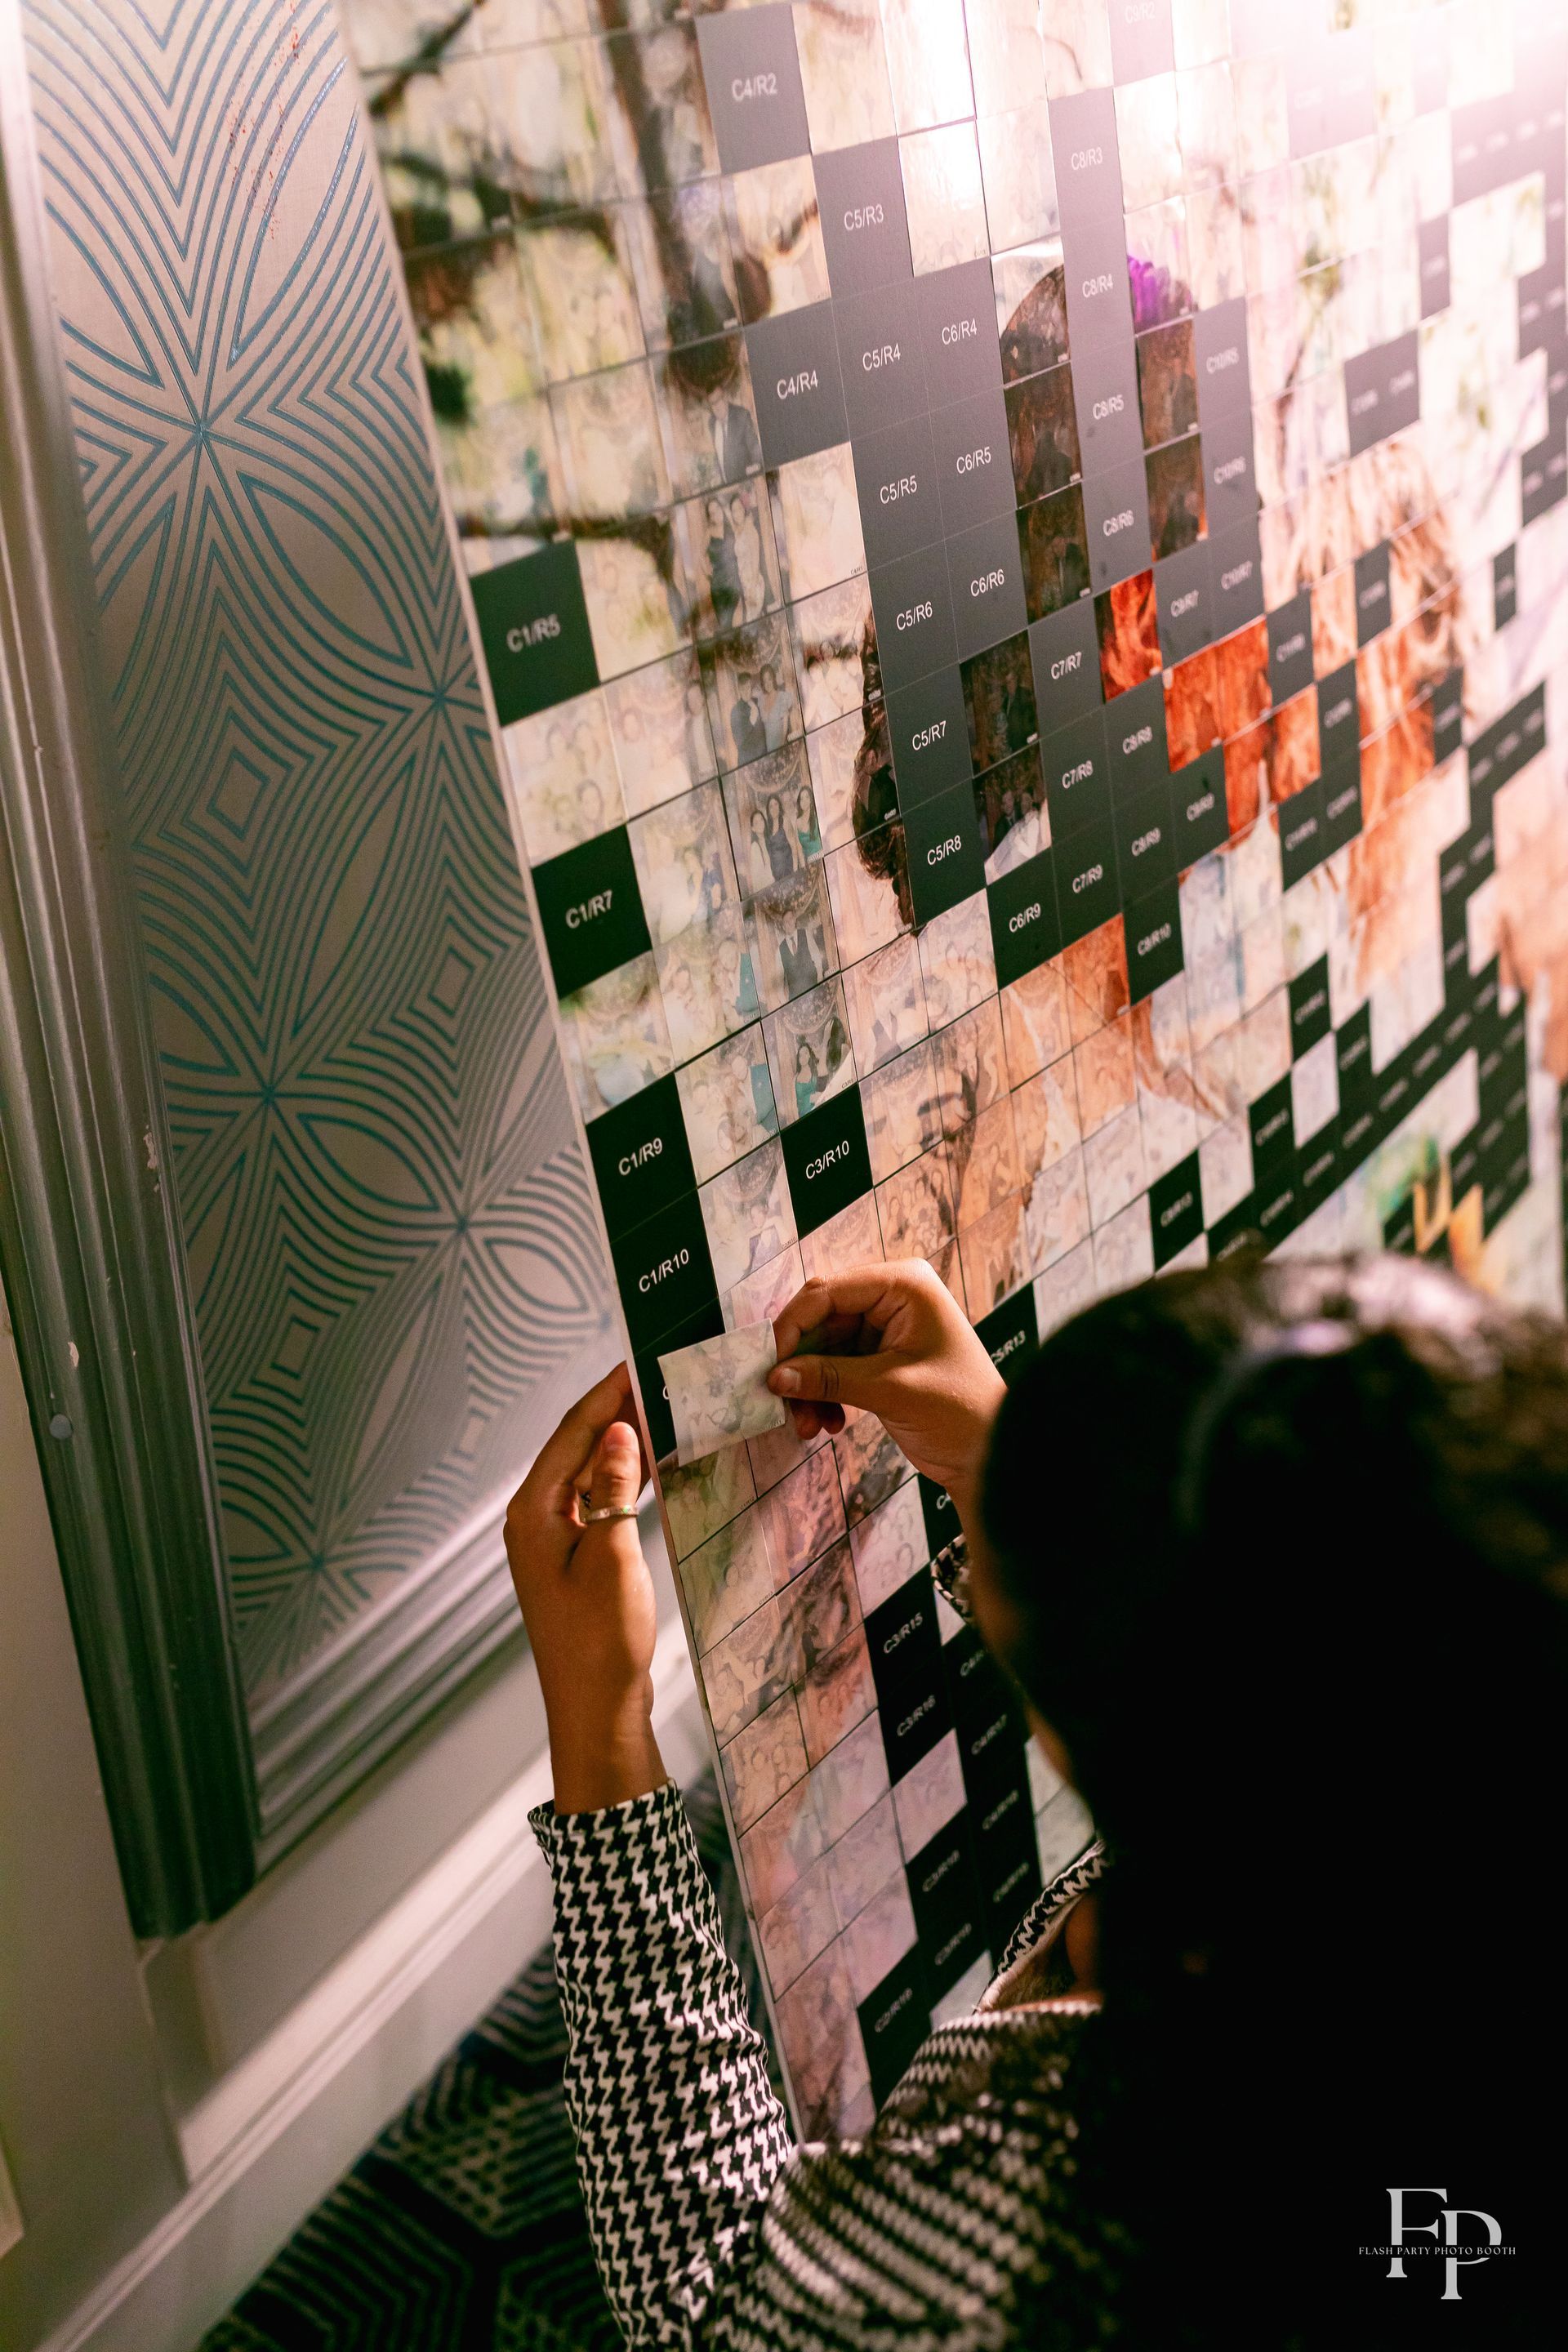 Participant at an event create mosaic artwork at the Mosaic Wall Photo Booth.